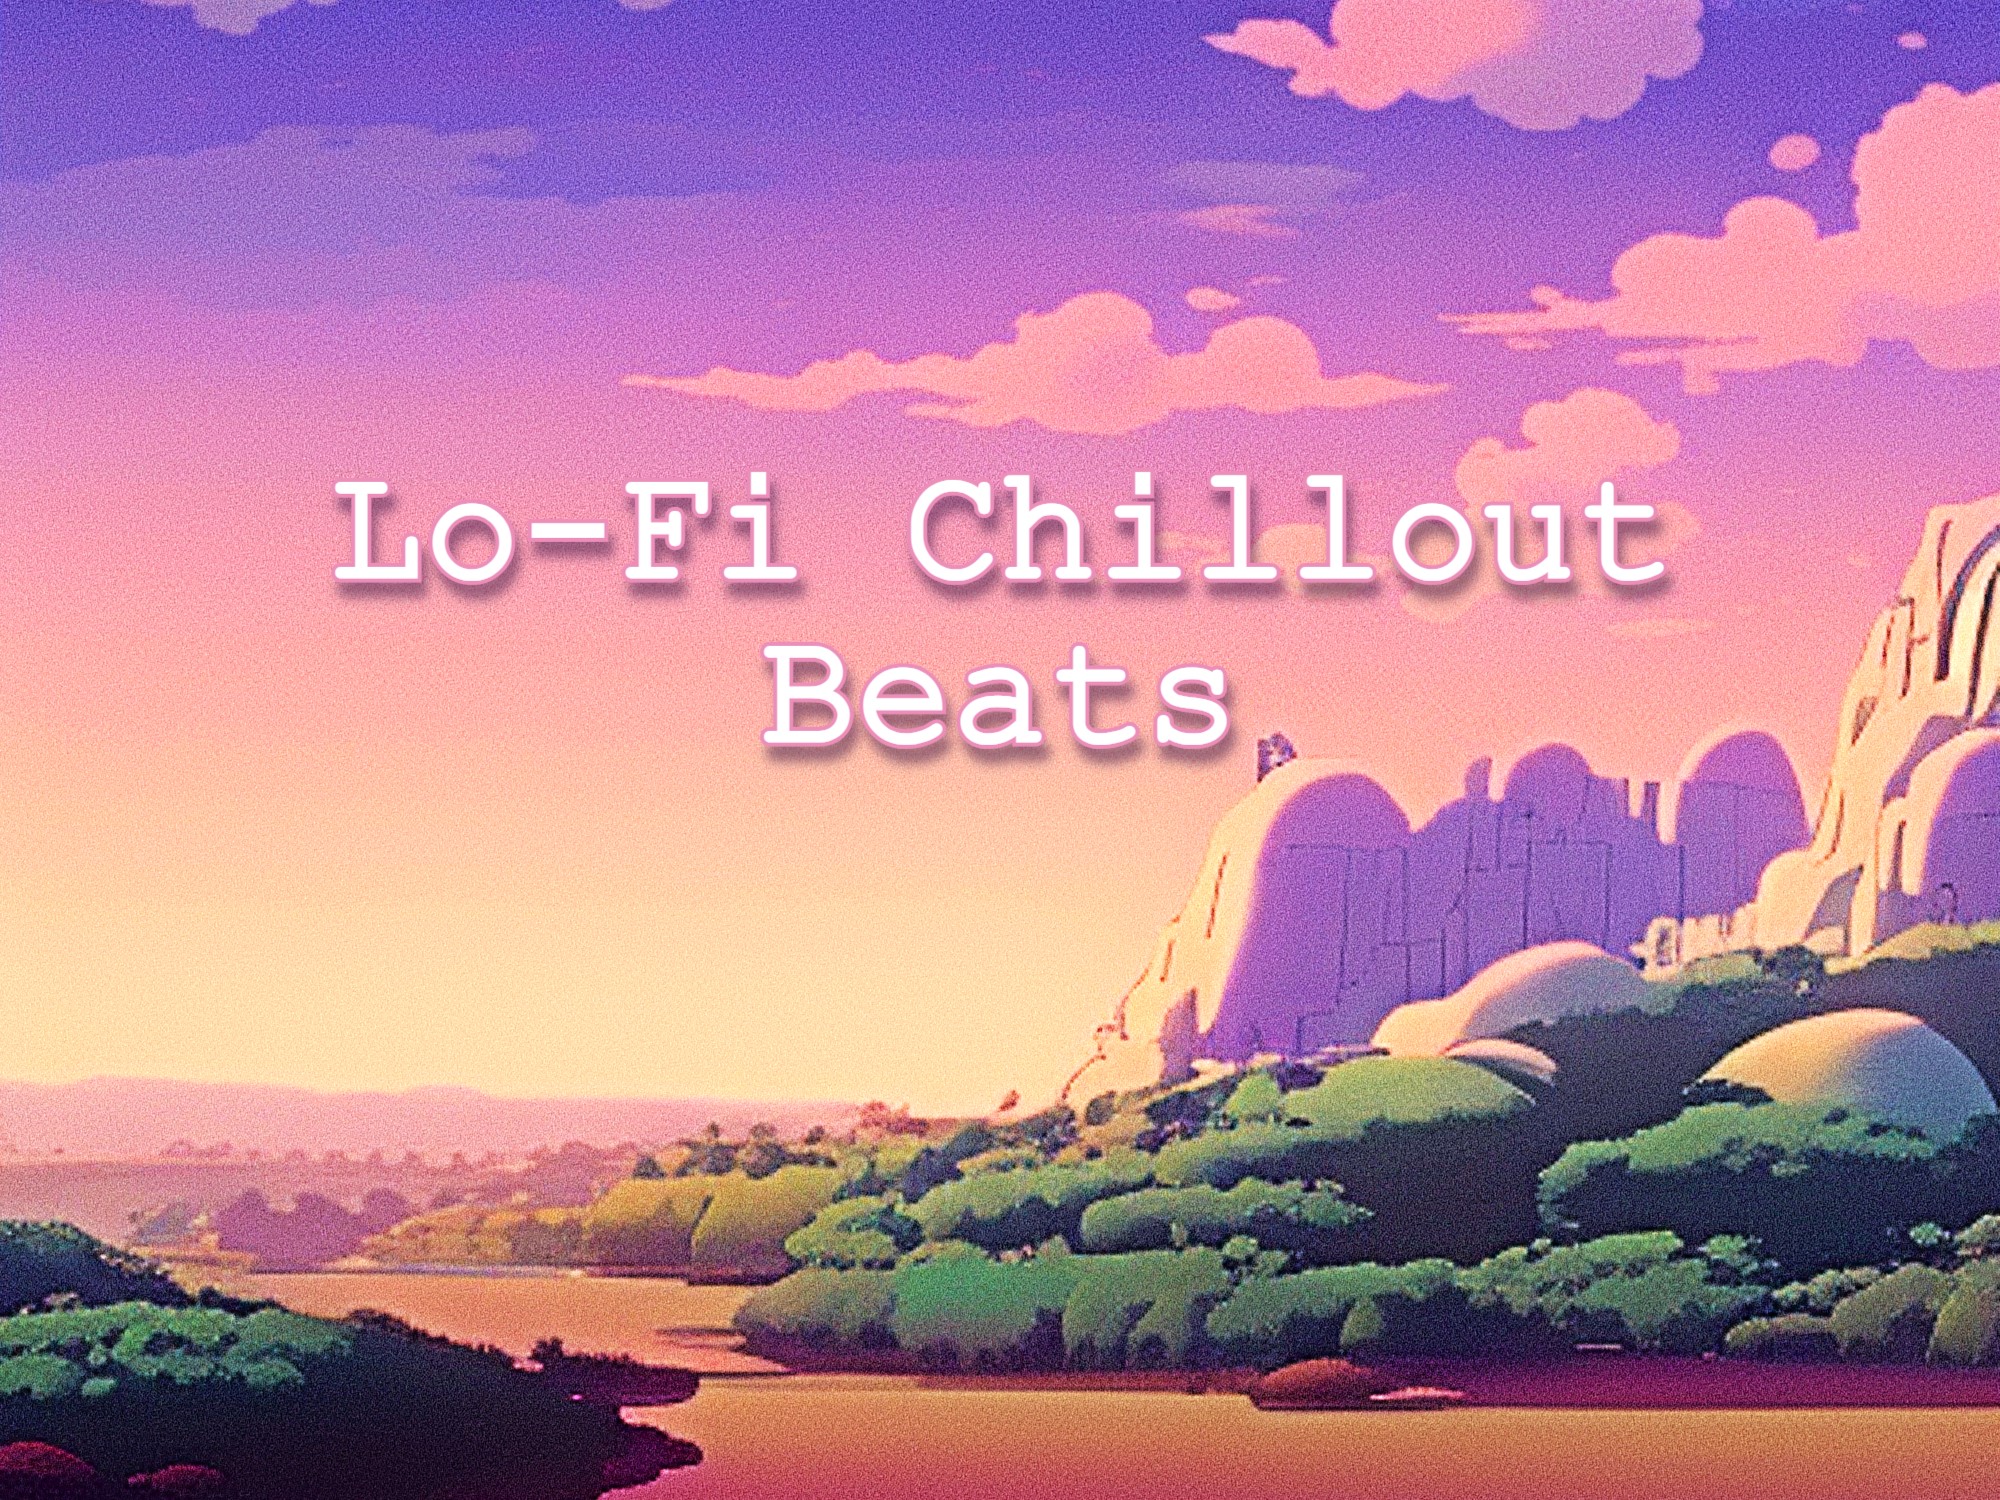 Lo-Fi Chillout Beats